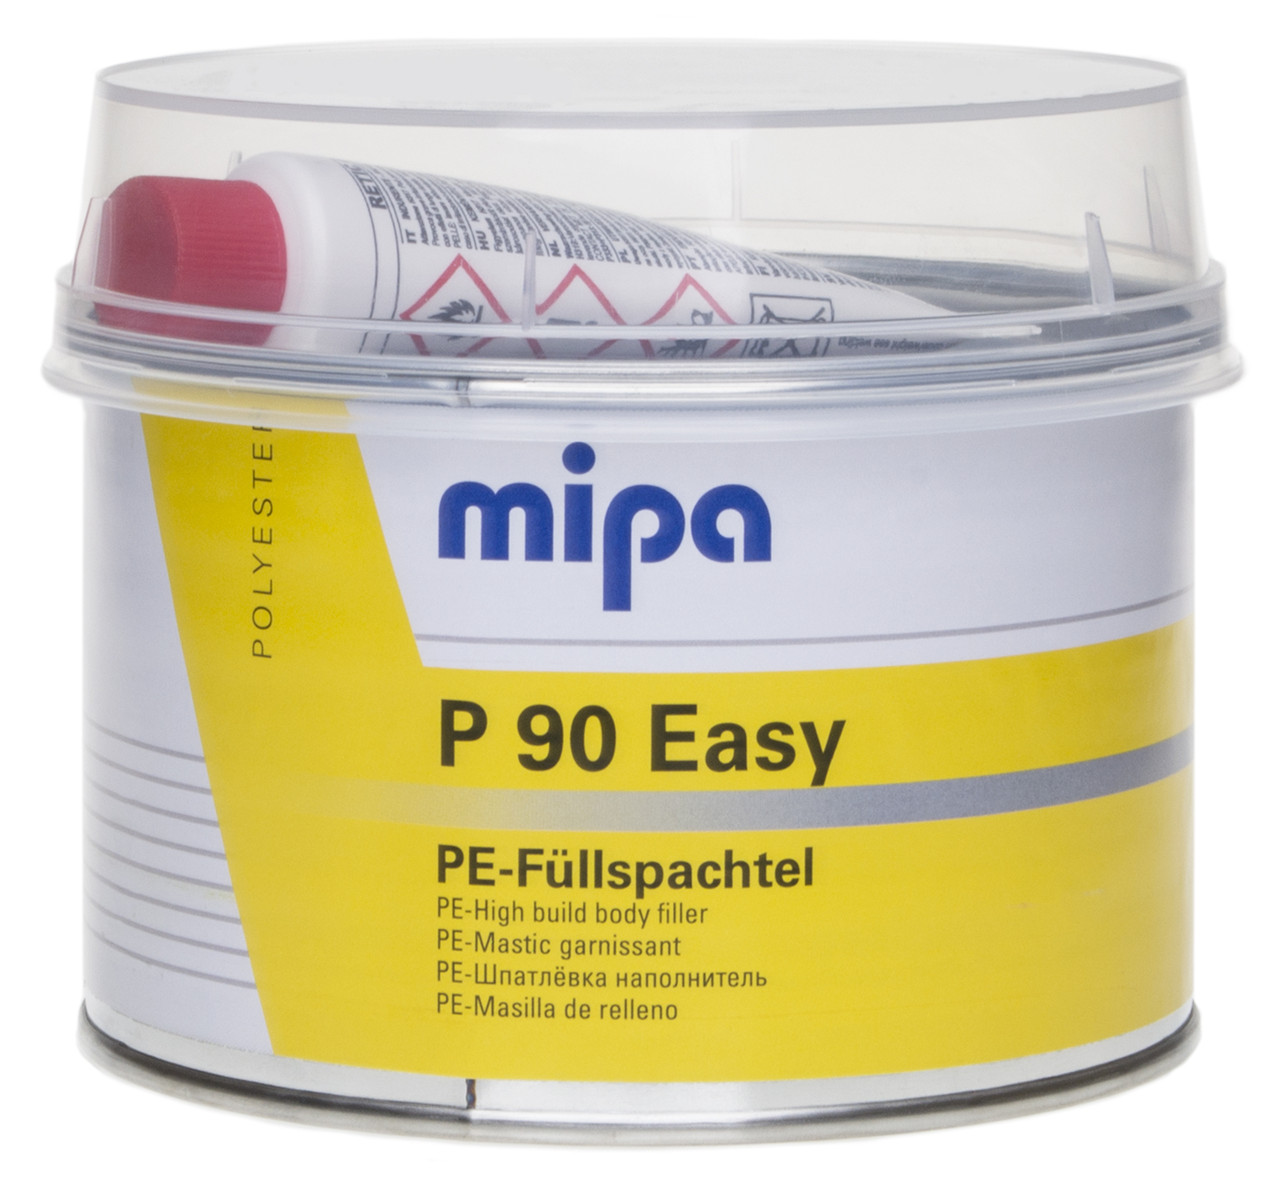 MIPA 288110000 P 90 Easy PE-Fullspachtel Шпатлевка-наполнитель 1кг